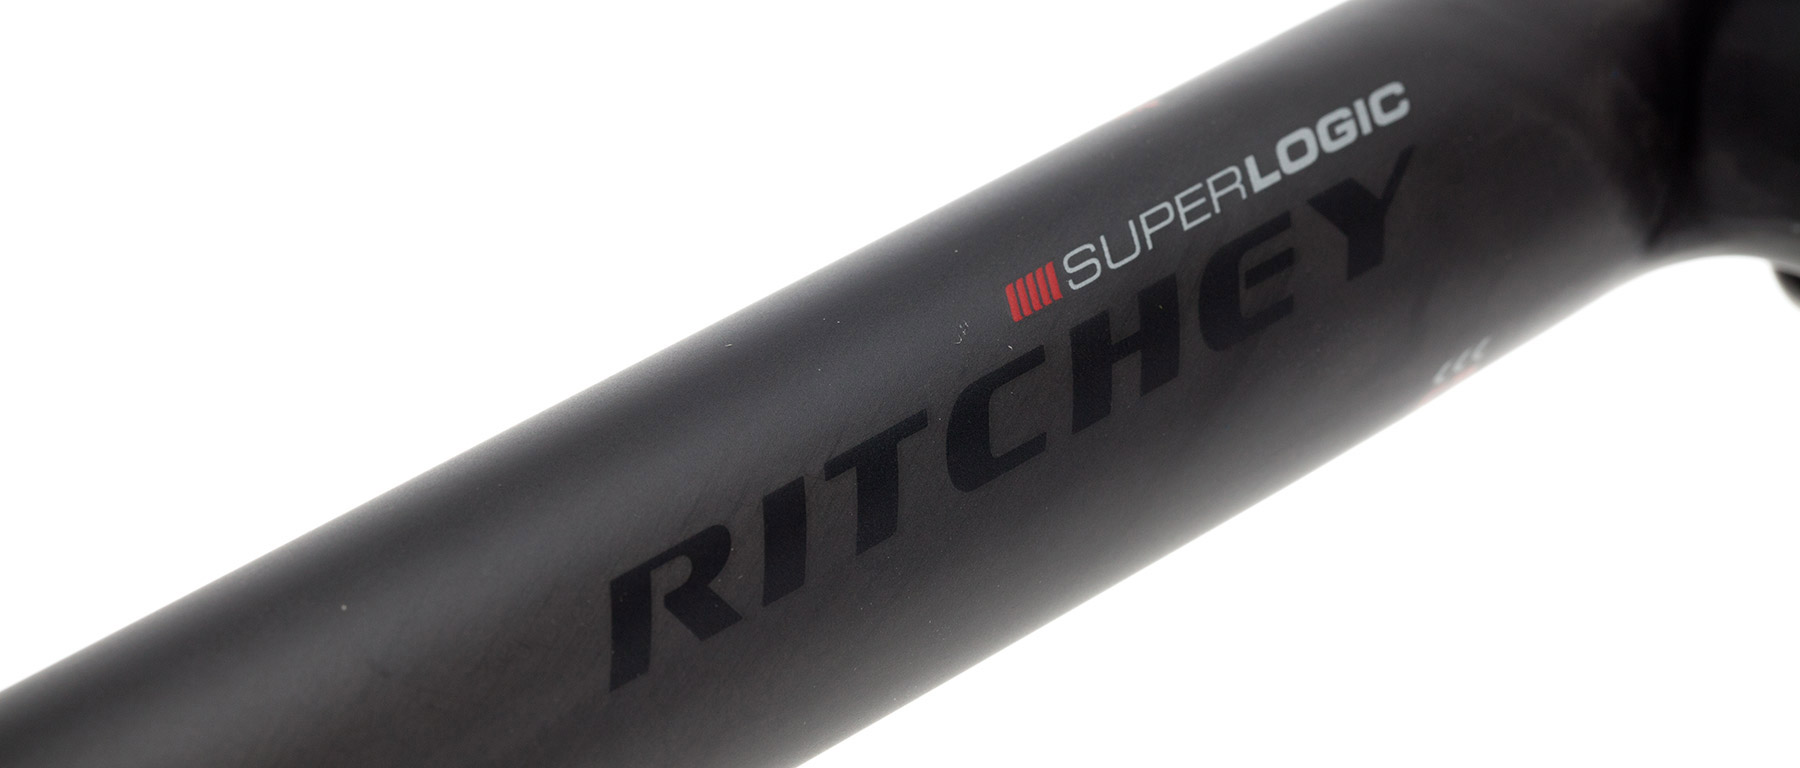 Ritchey SuperLogic Link Carbon Seatpost